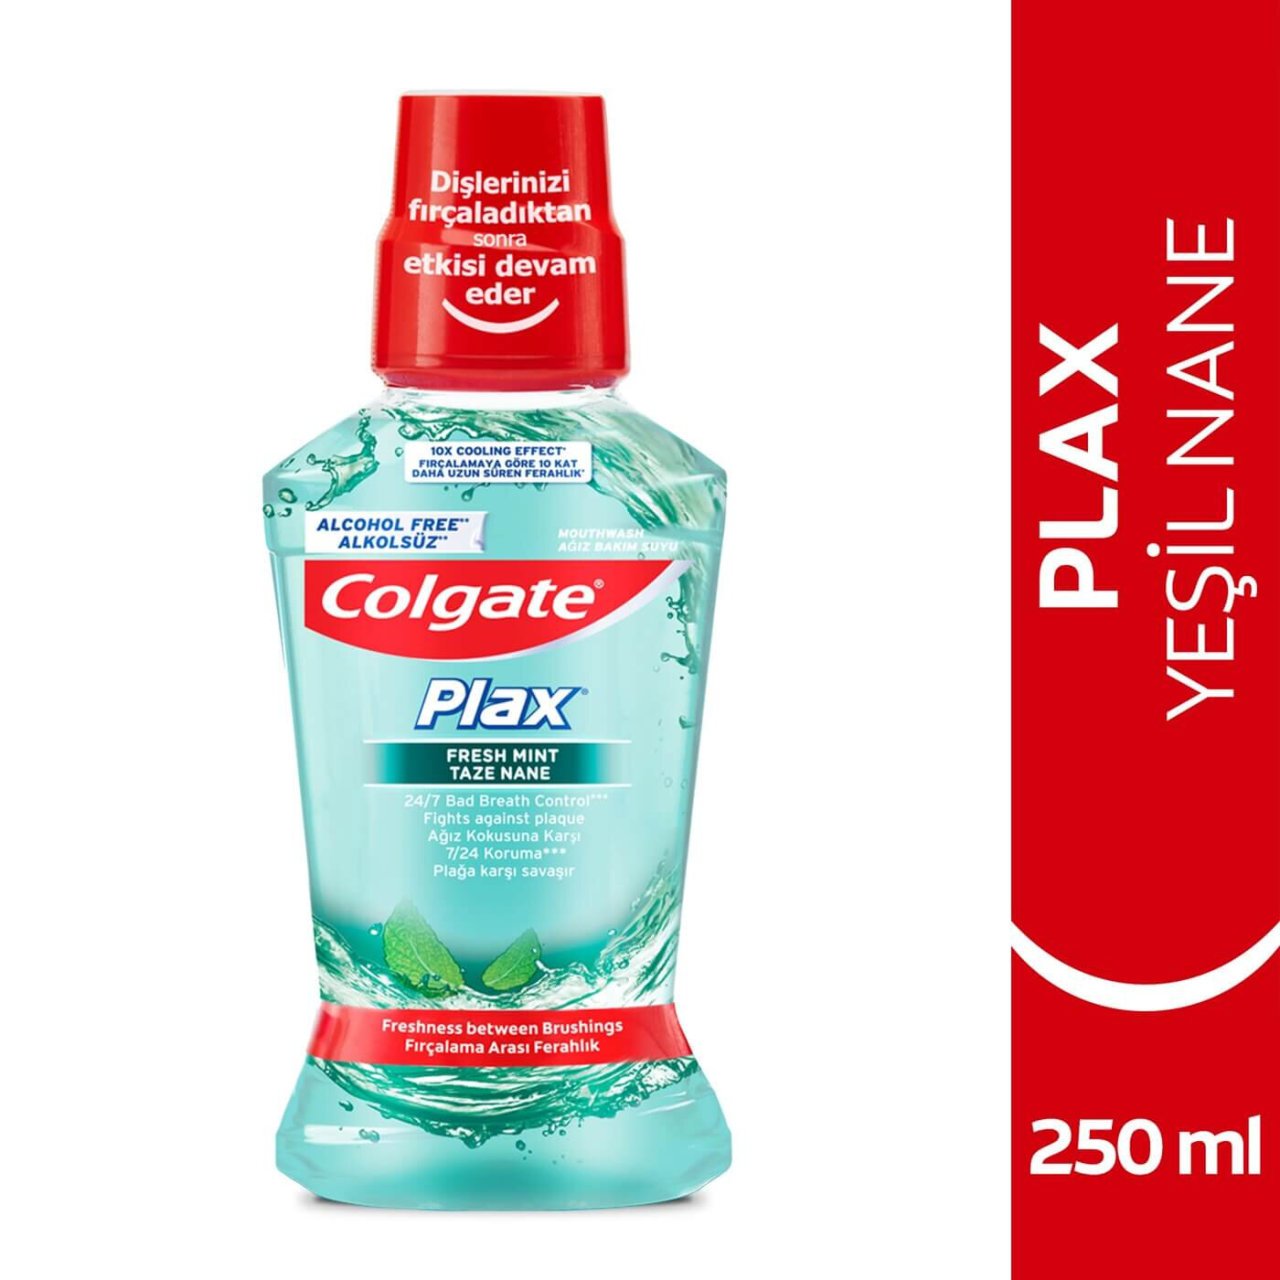 Colgate Plax Taze Nane 250 ml